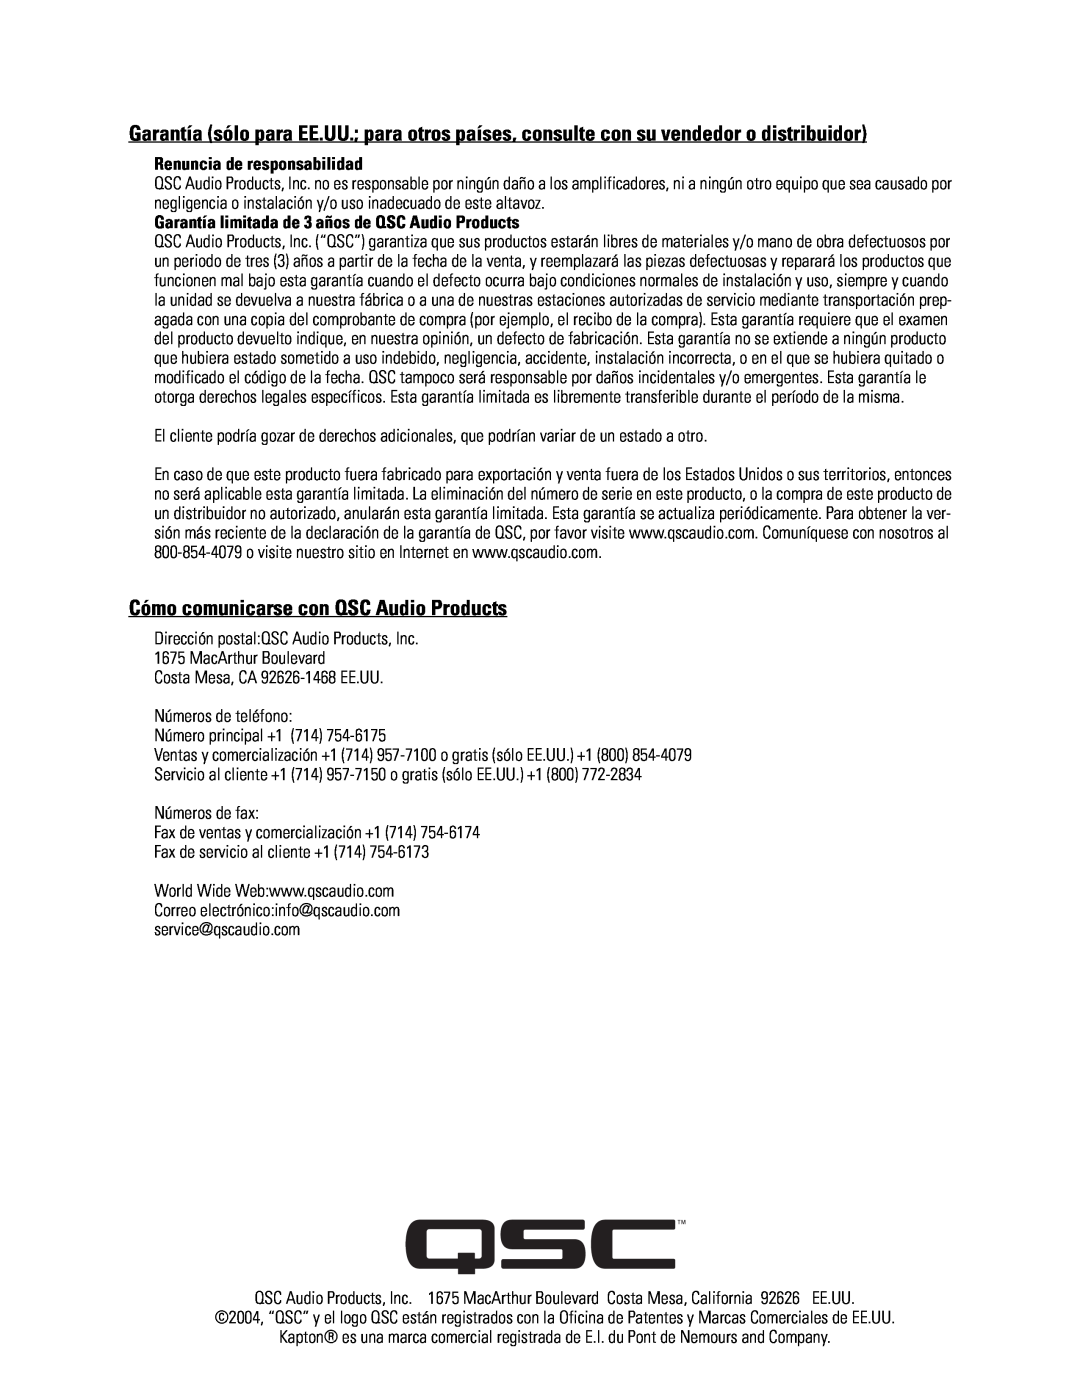 QSC Audio SC-322 specifications Cómo comunicarse con QSC Audio Products, Costa Mesa, CA 92626-1468EE.UU 